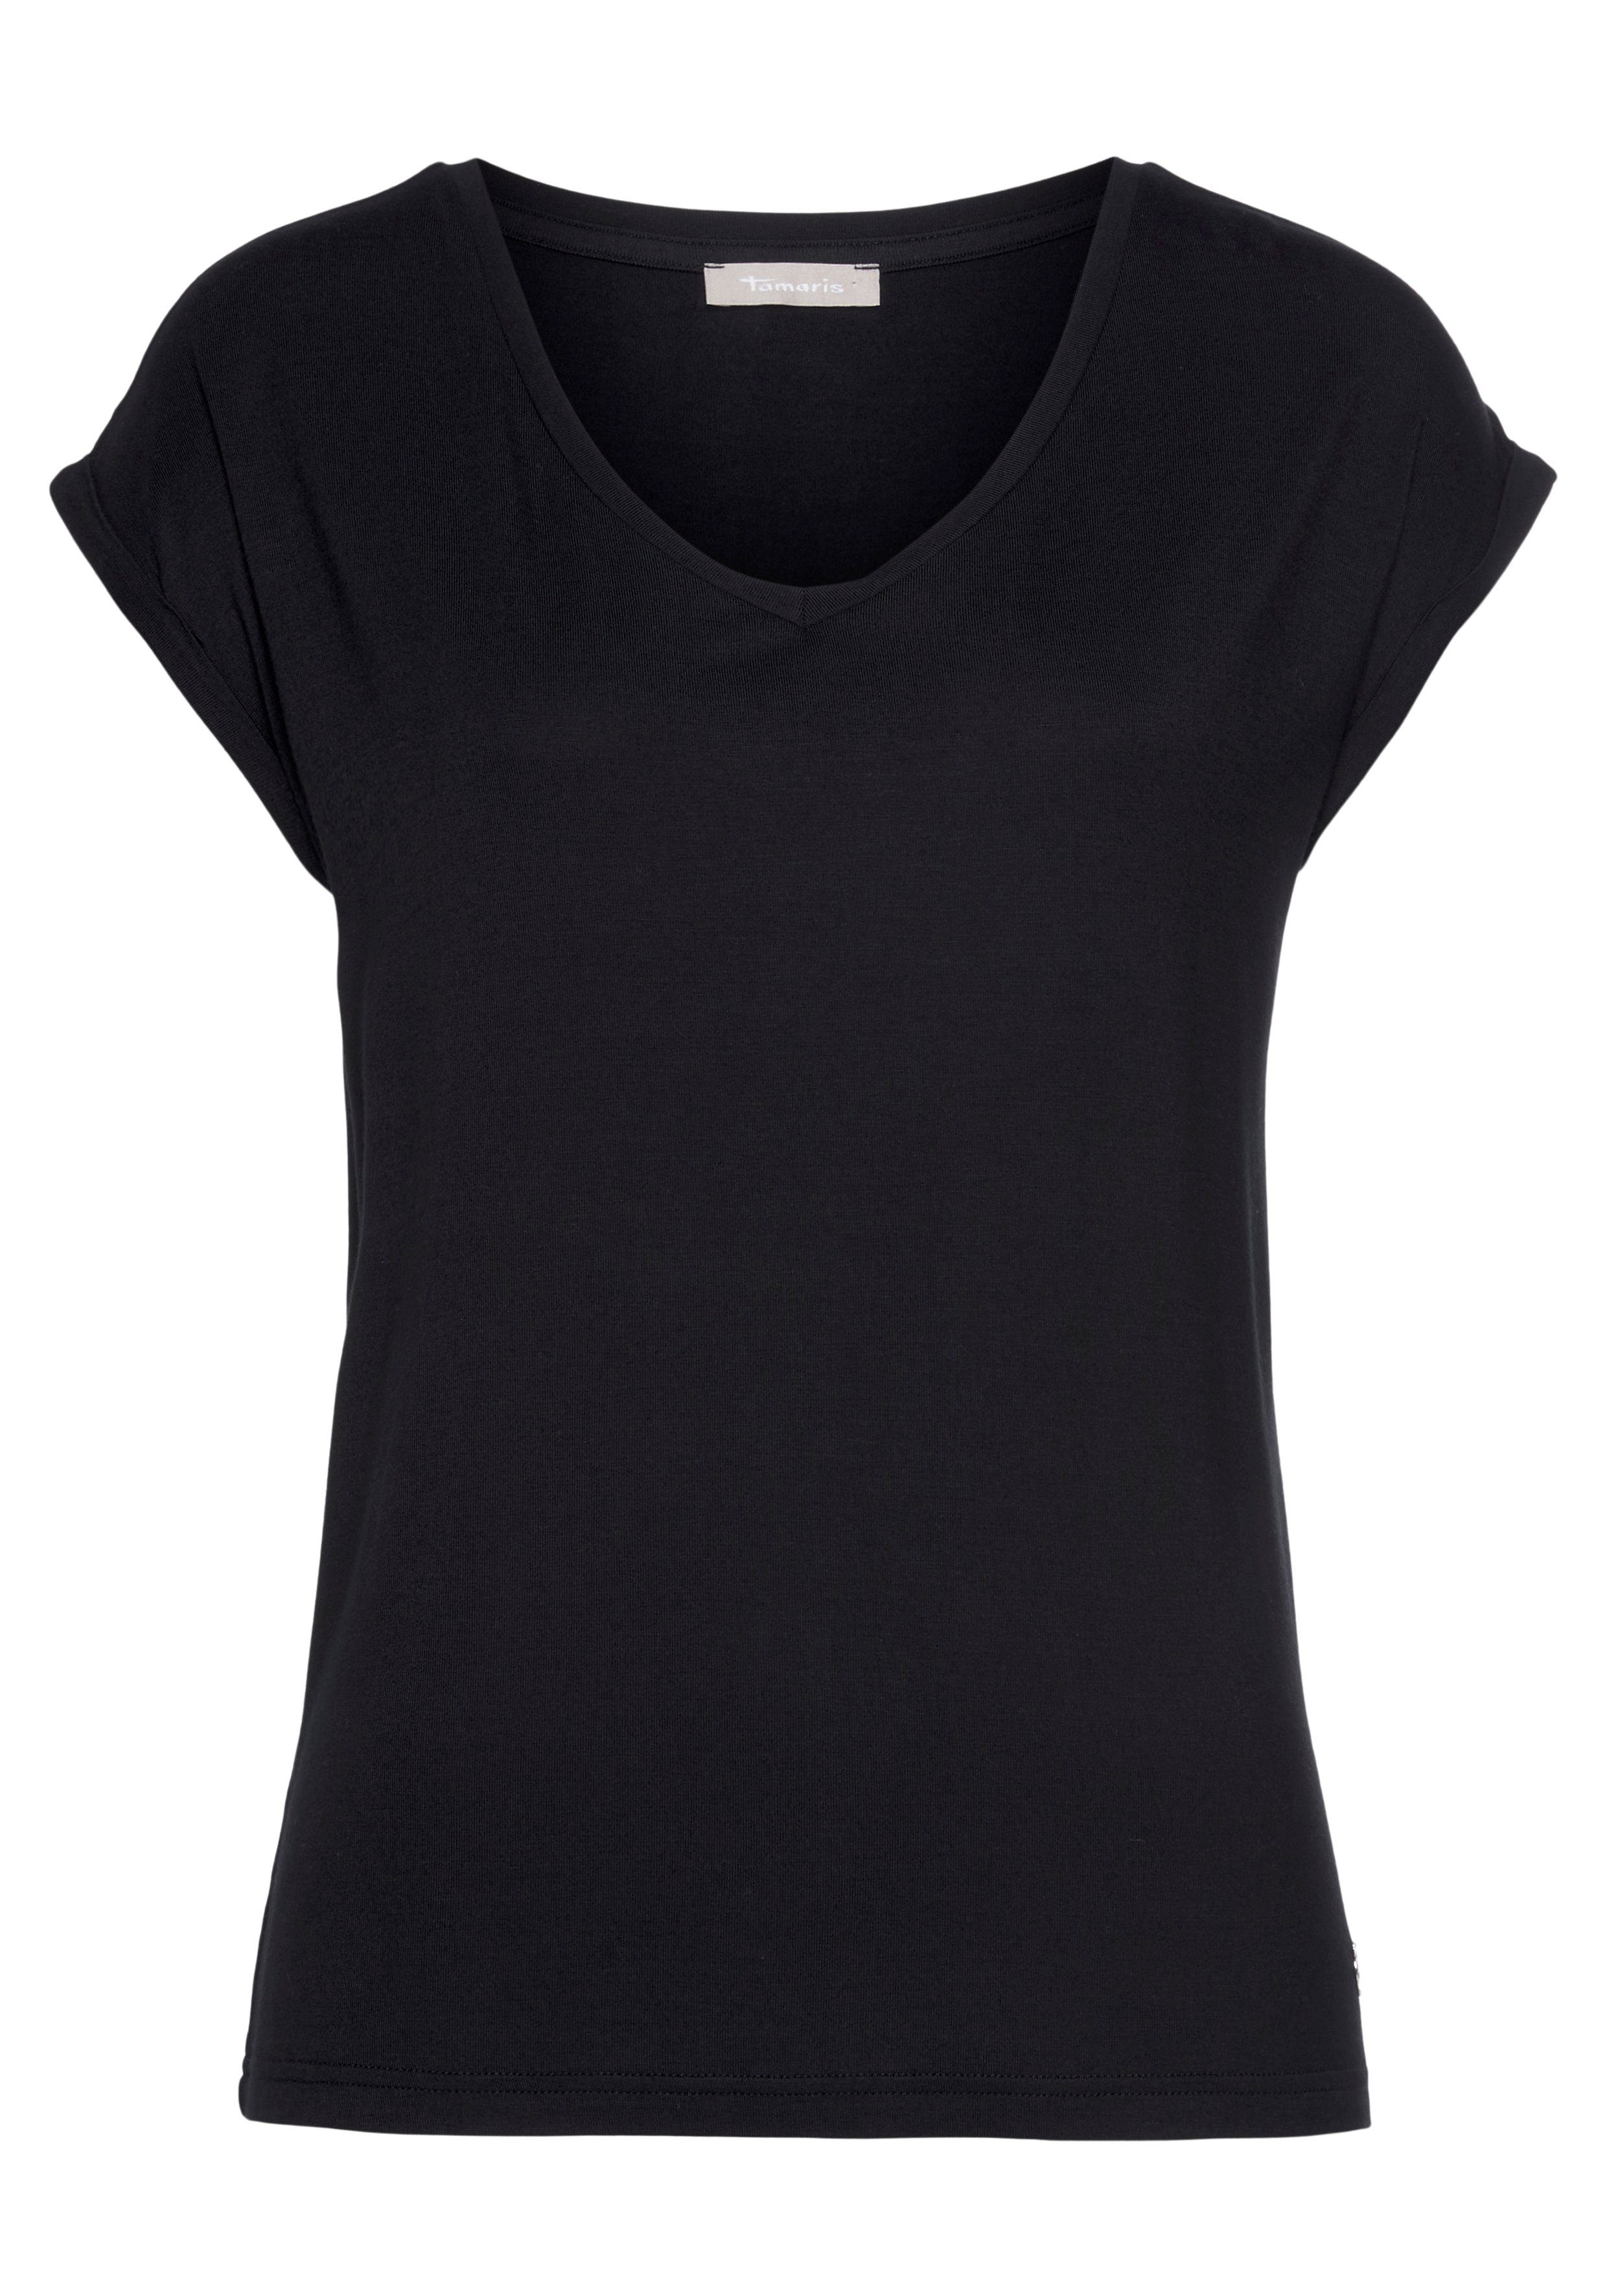 Tamaris V-Shirt mit lockerer eco schwarz Passform